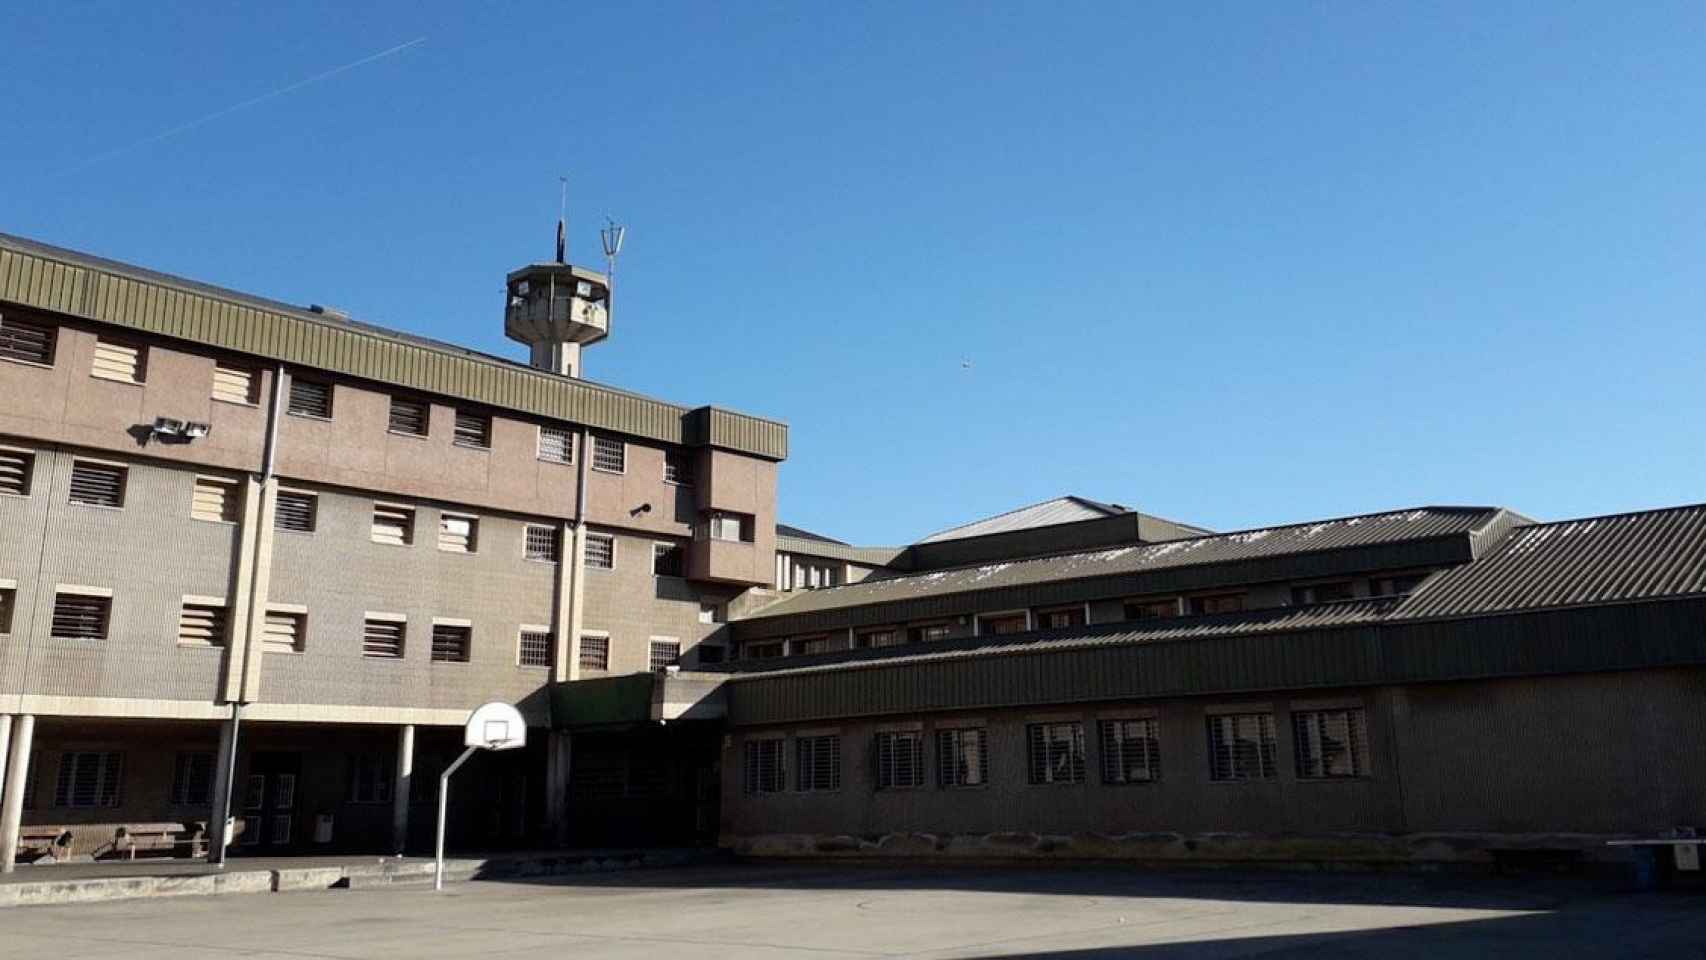 Centro penitenciario de Quatre Camins